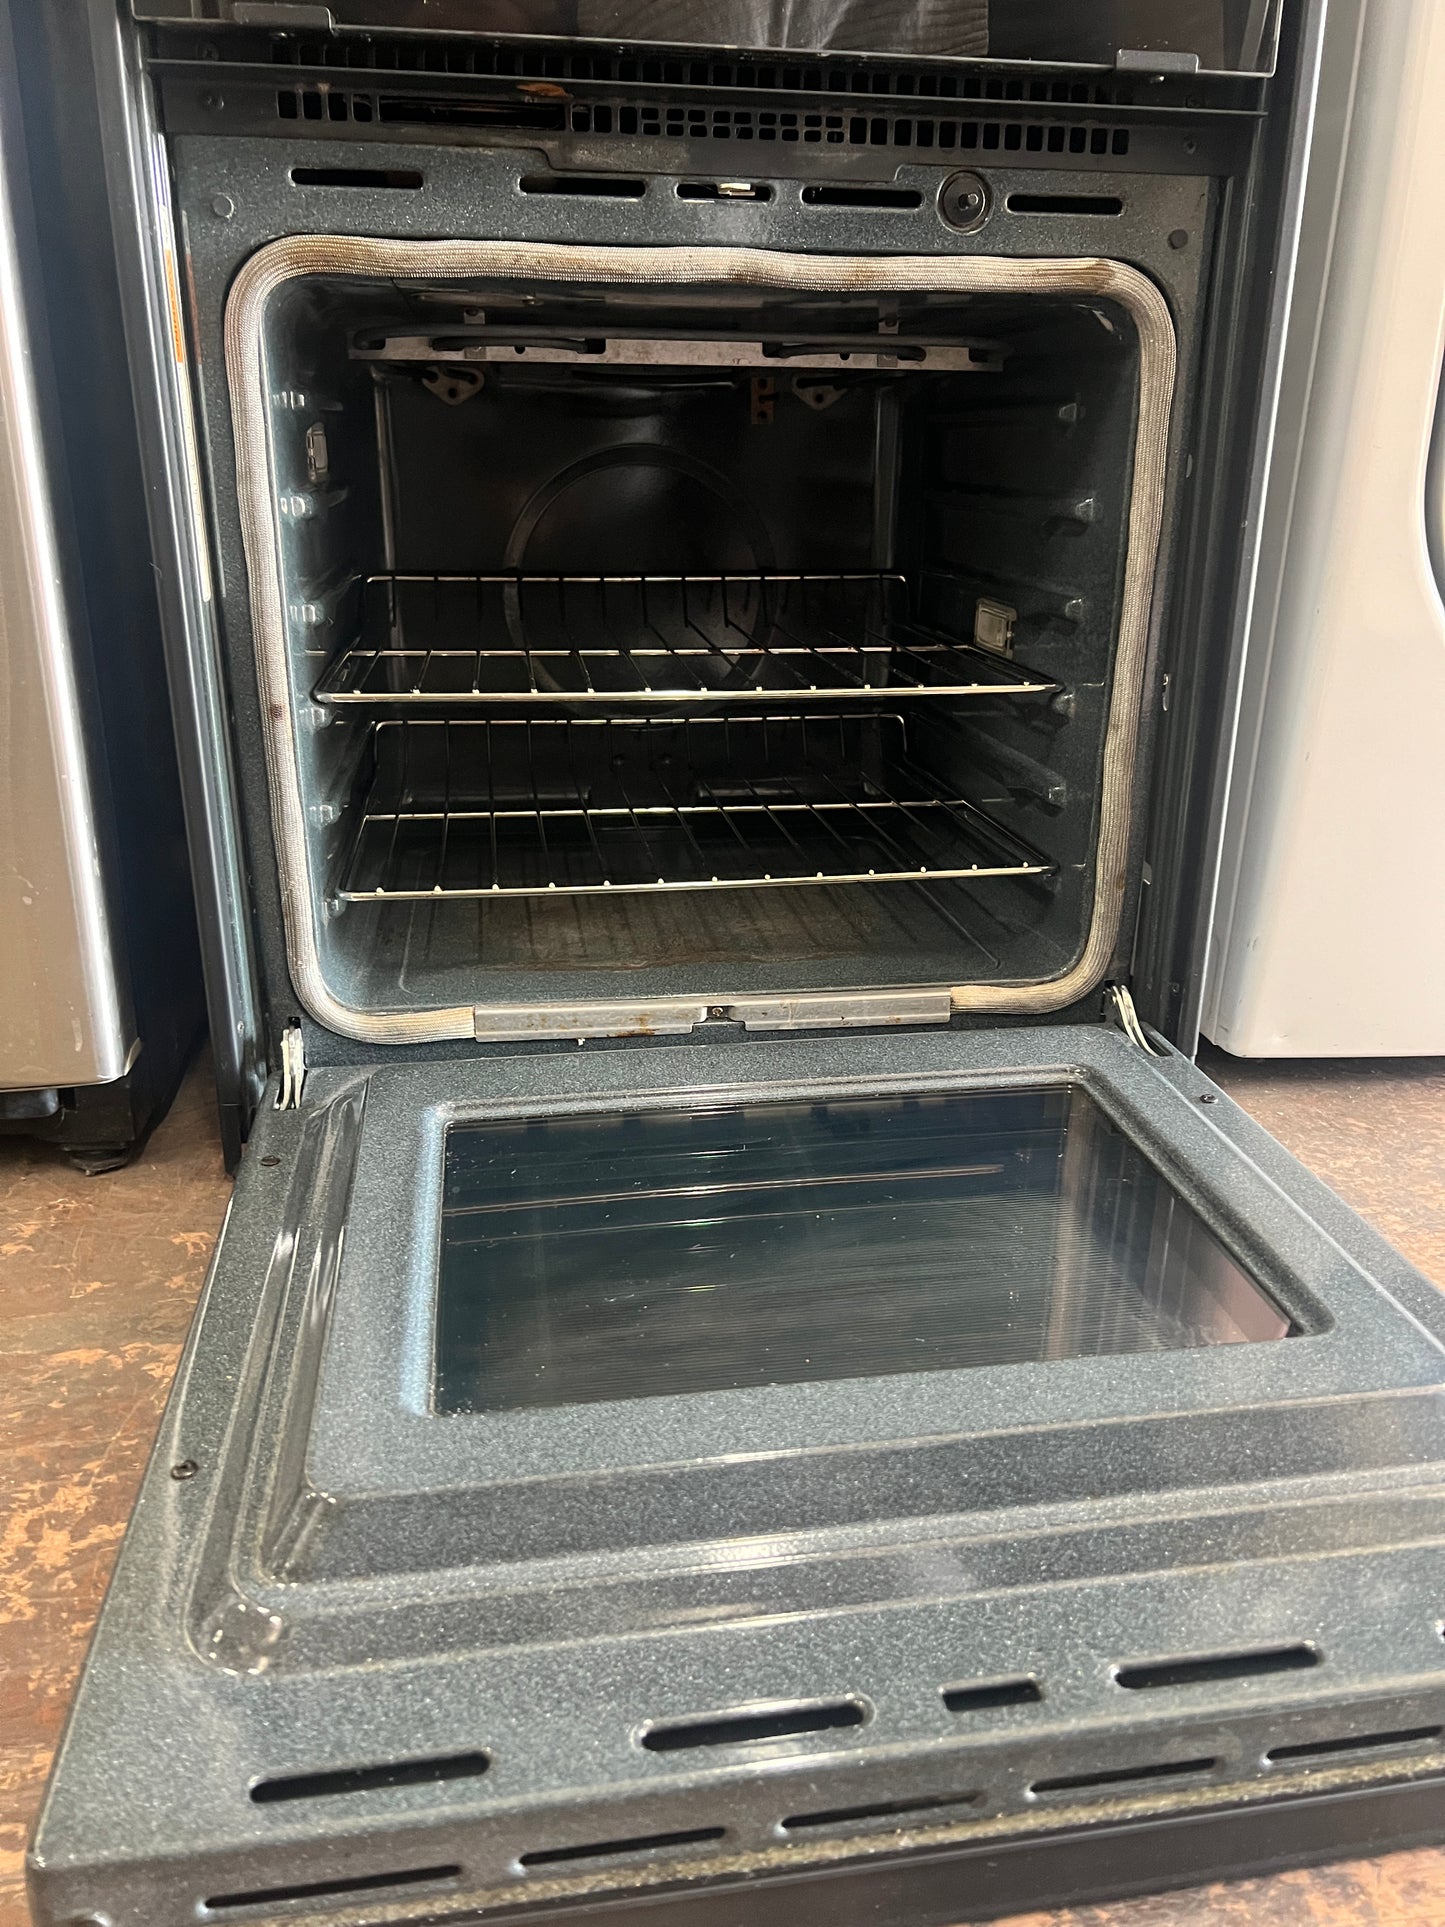 KitchenAid Superba 24 inch Double Oven In Black, KEBS247DBL2, 999508